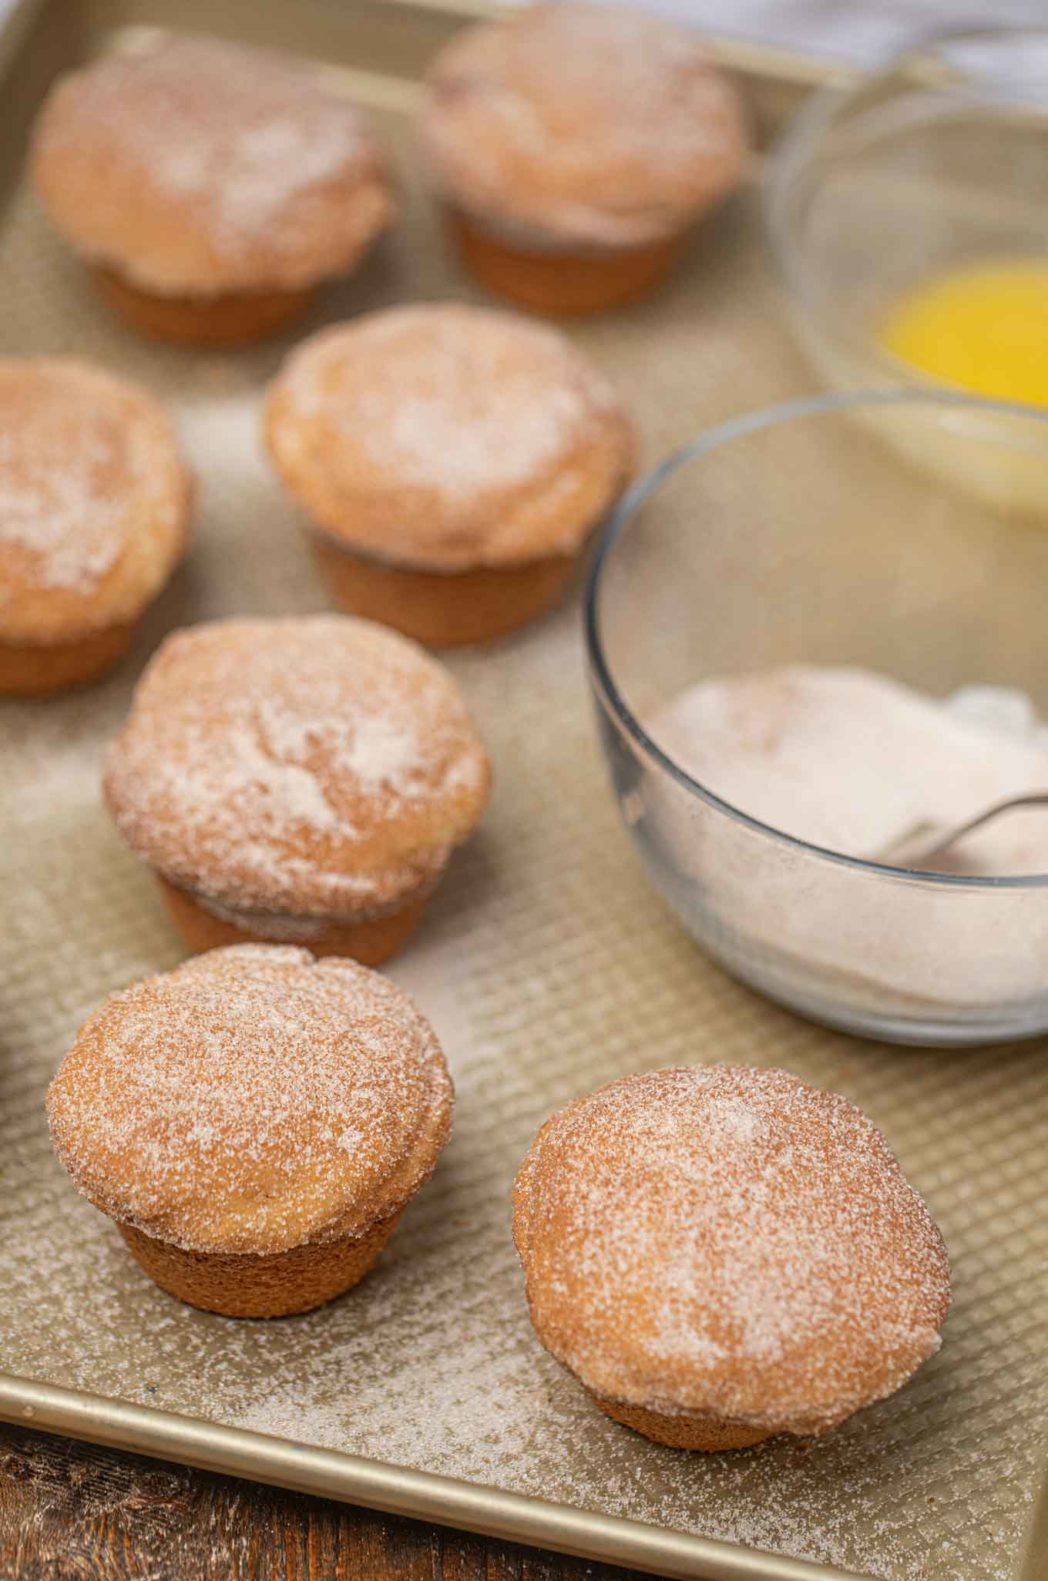 Cinnamon Sugar Donut Muffins with cinnamon sugar topping